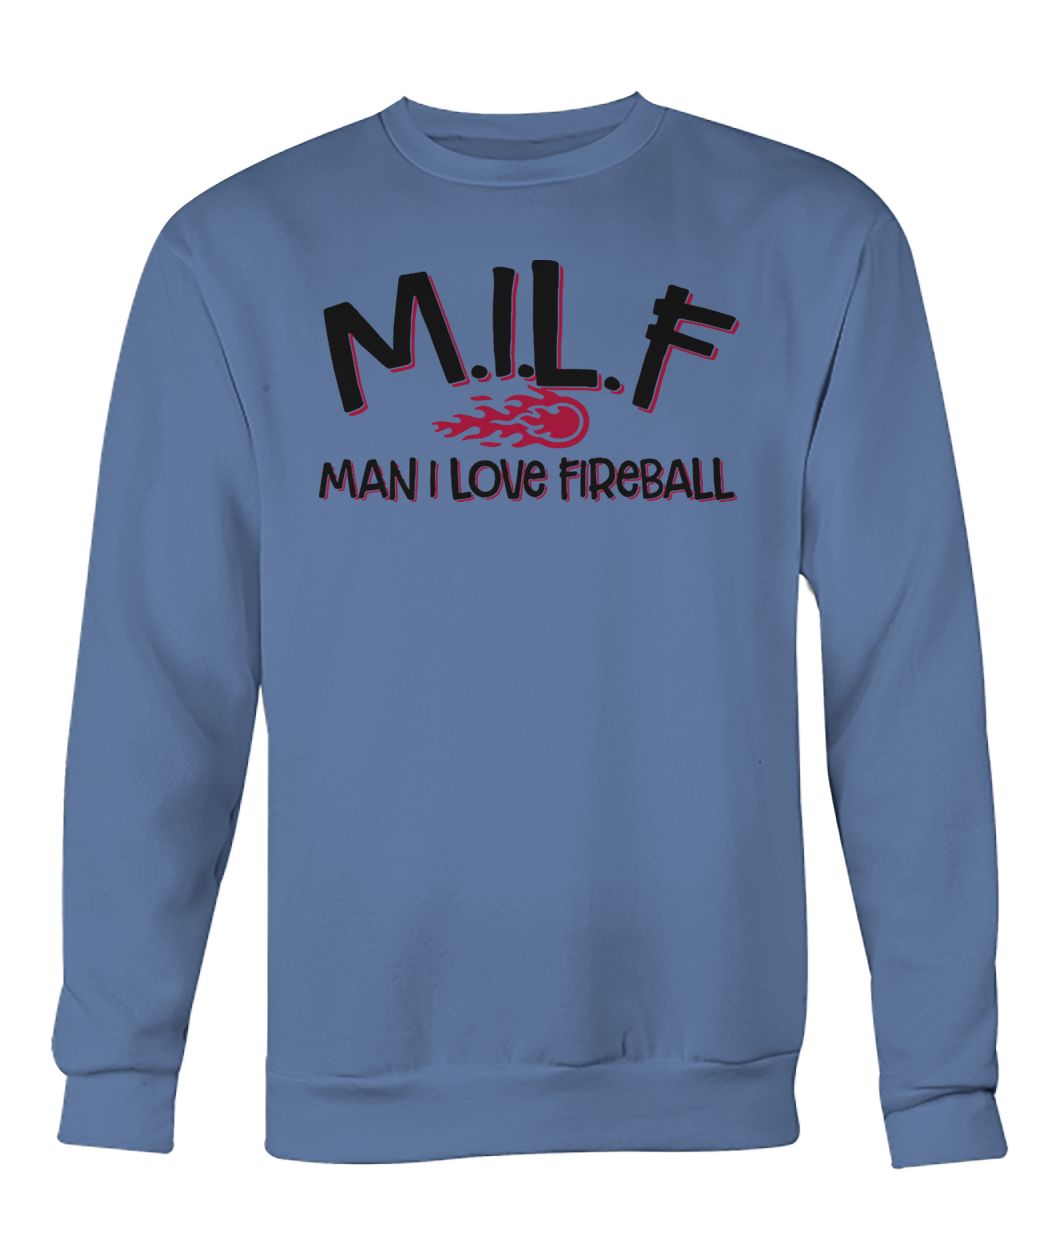 MILF man I love fireball crew neck sweatshirt